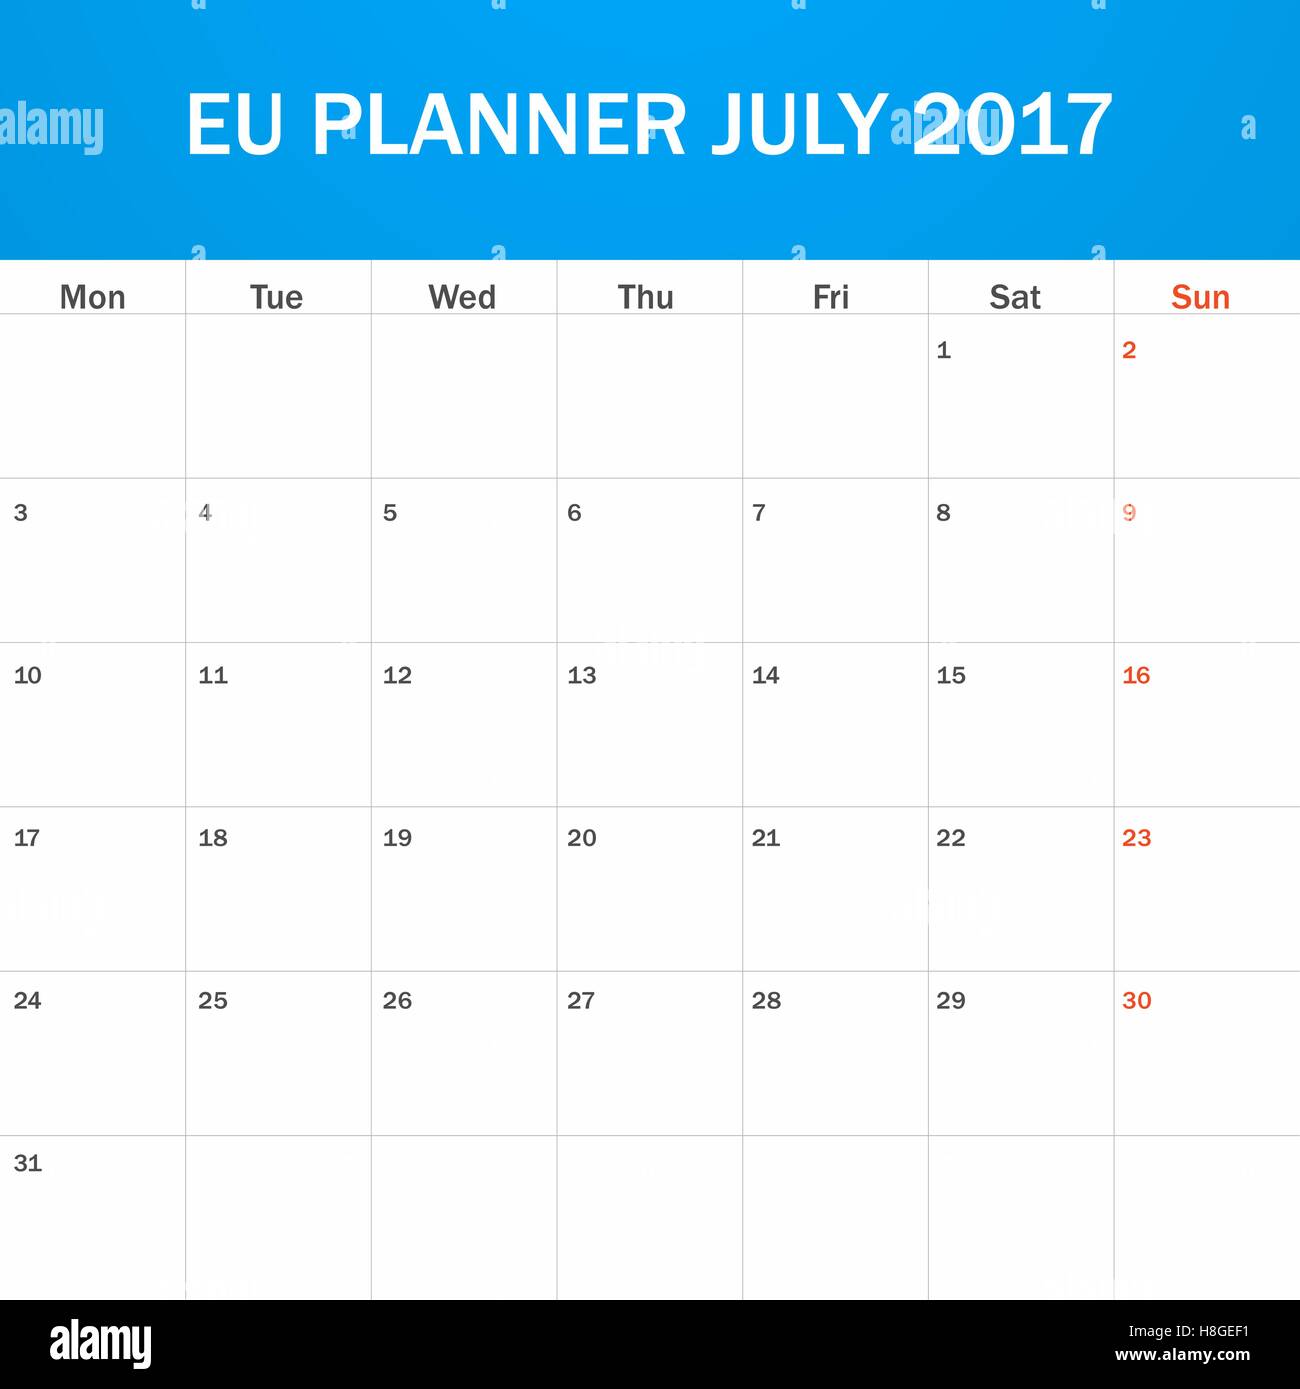 Week schedule blank Banque d'images vectorielles - Page 3 - Alamy